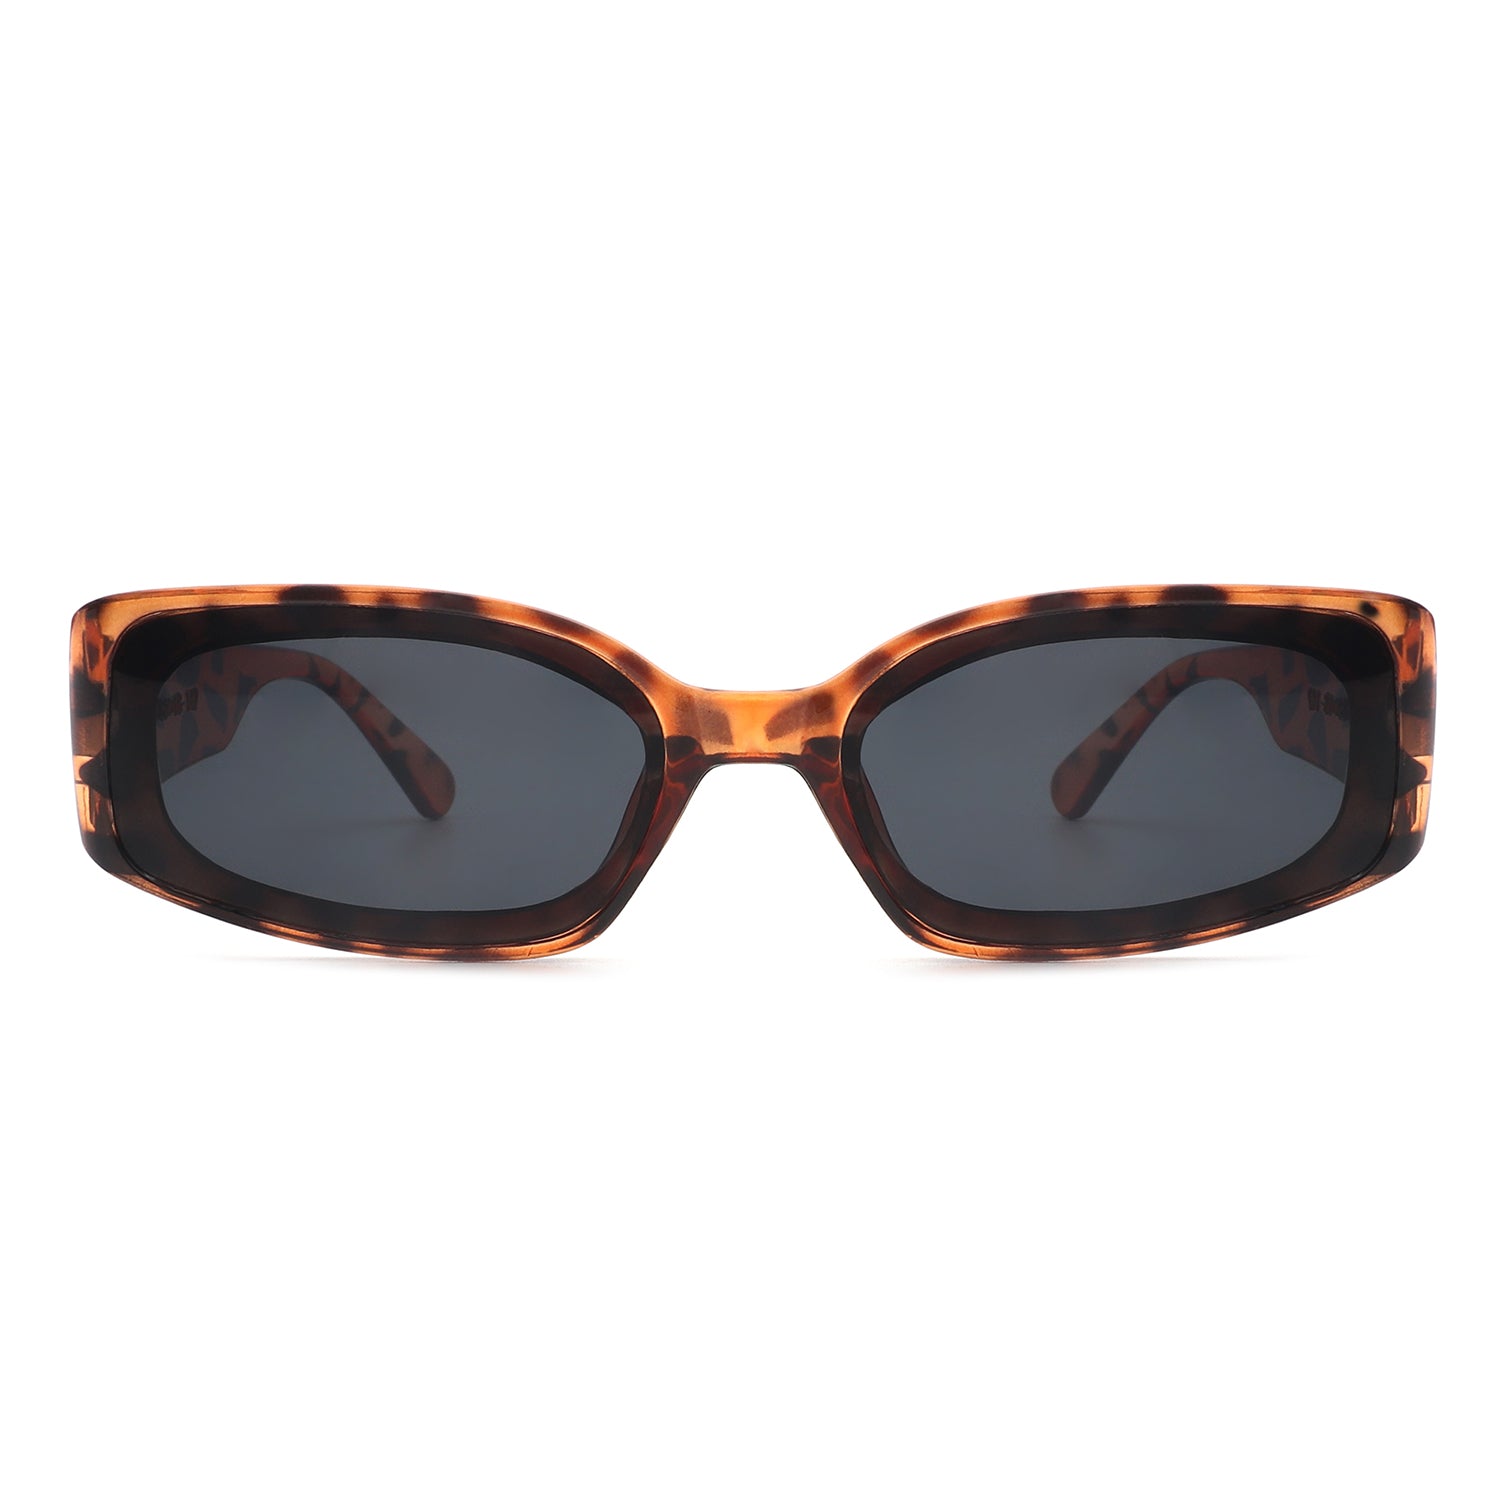 HS18063 - Retro Rectangle Vintage Small Square Fashion Sunglasses